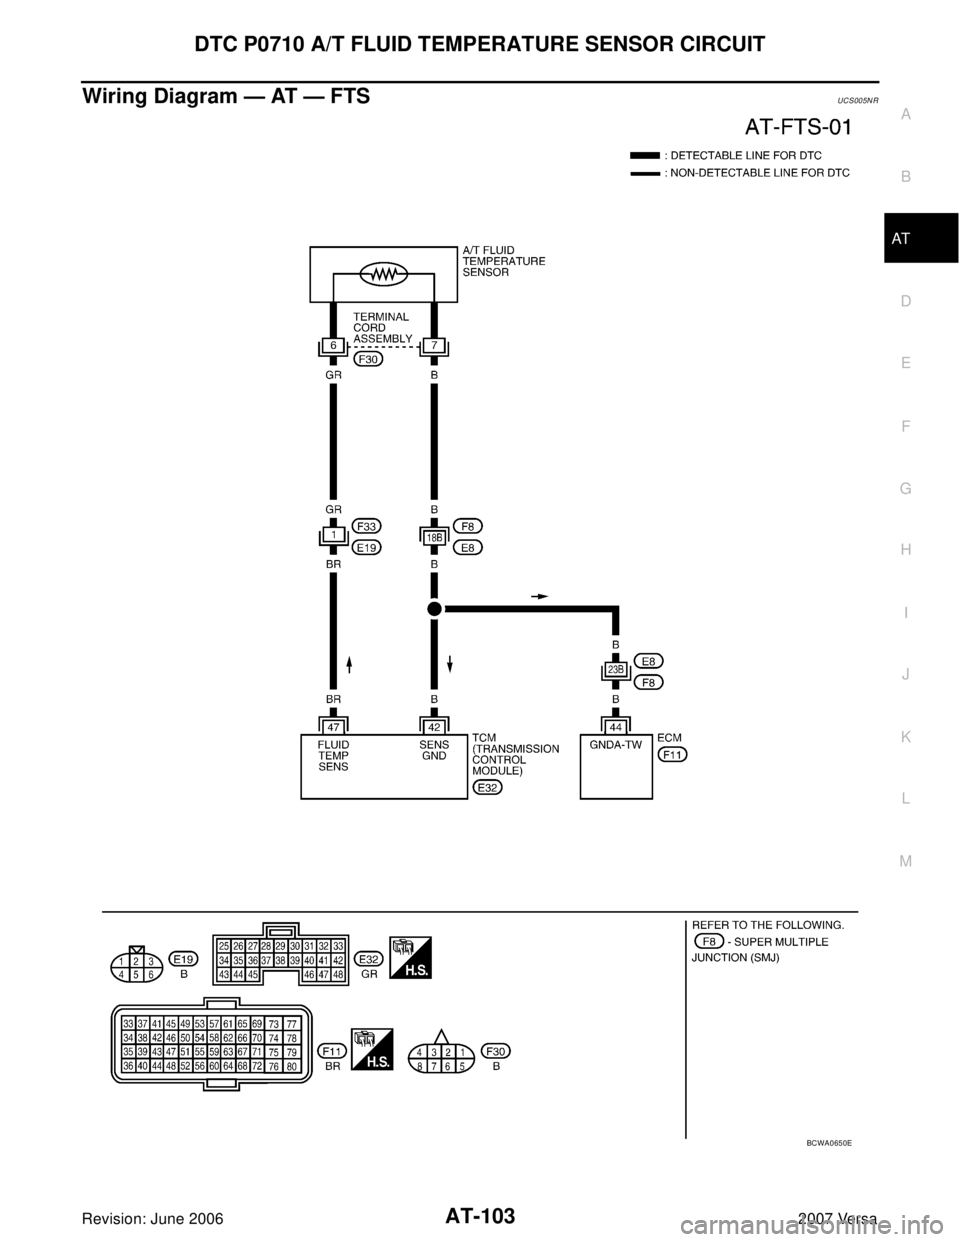 NISSAN VERSA 2006  Workshop  Service Repair Manual DTC P0710 A/T FLUID TEMPERATURE SENSOR CIRCUIT
AT-103
D
E
F
G
H
I
J
K
L
MA
B
AT
Revision: June 20062007 Versa
Wiring Diagram — AT — FTSUCS005N R
BCWA0650E 